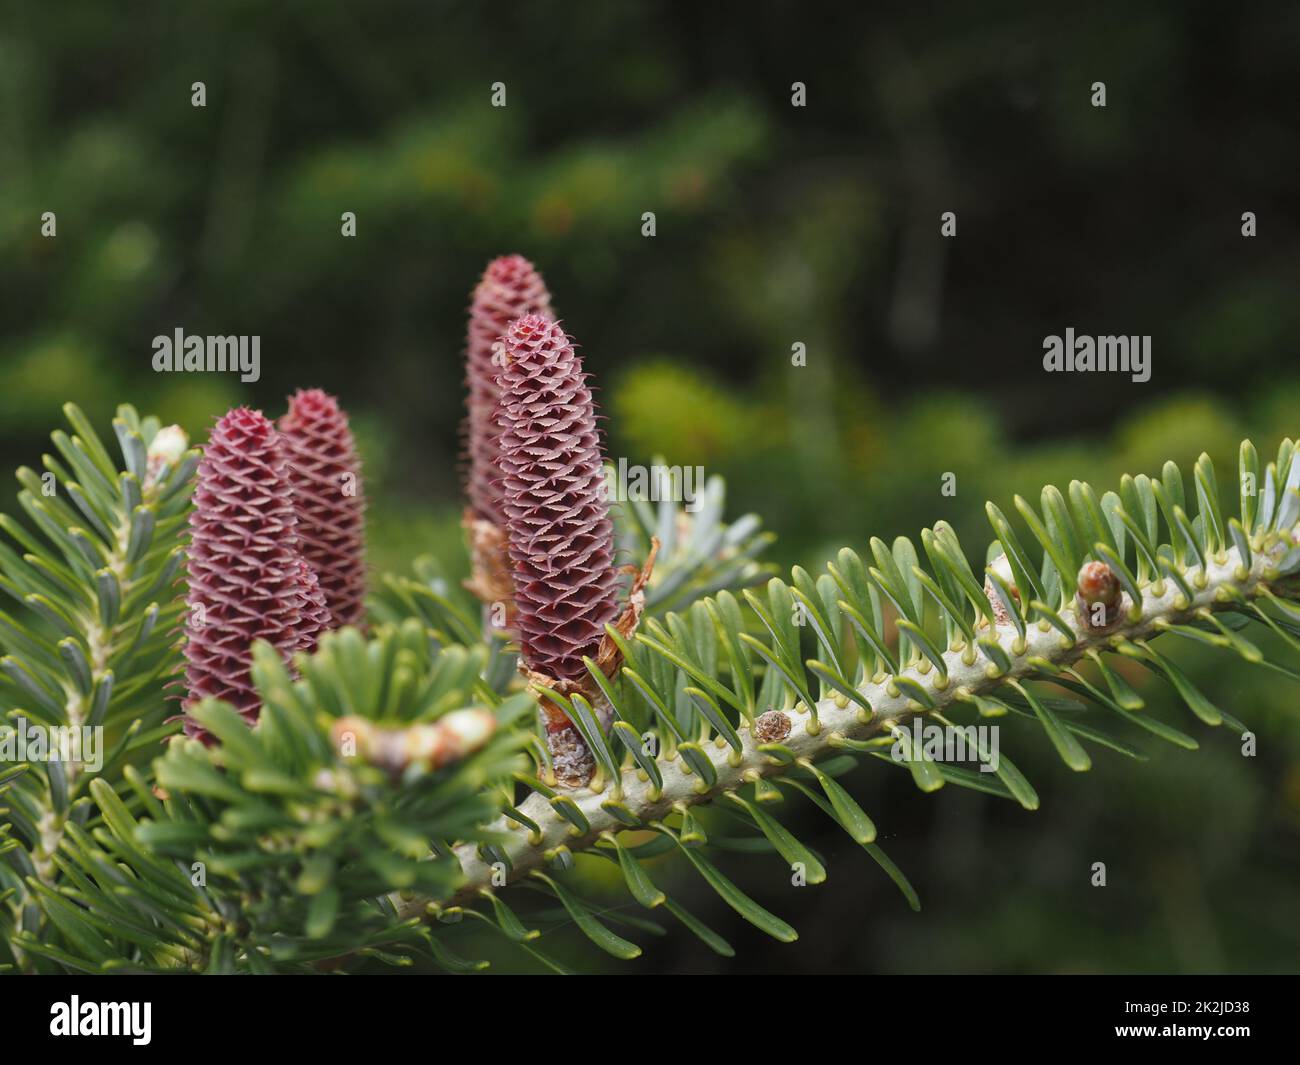 Korea fir, Abies koreana, pollinating female cones Stock Photo